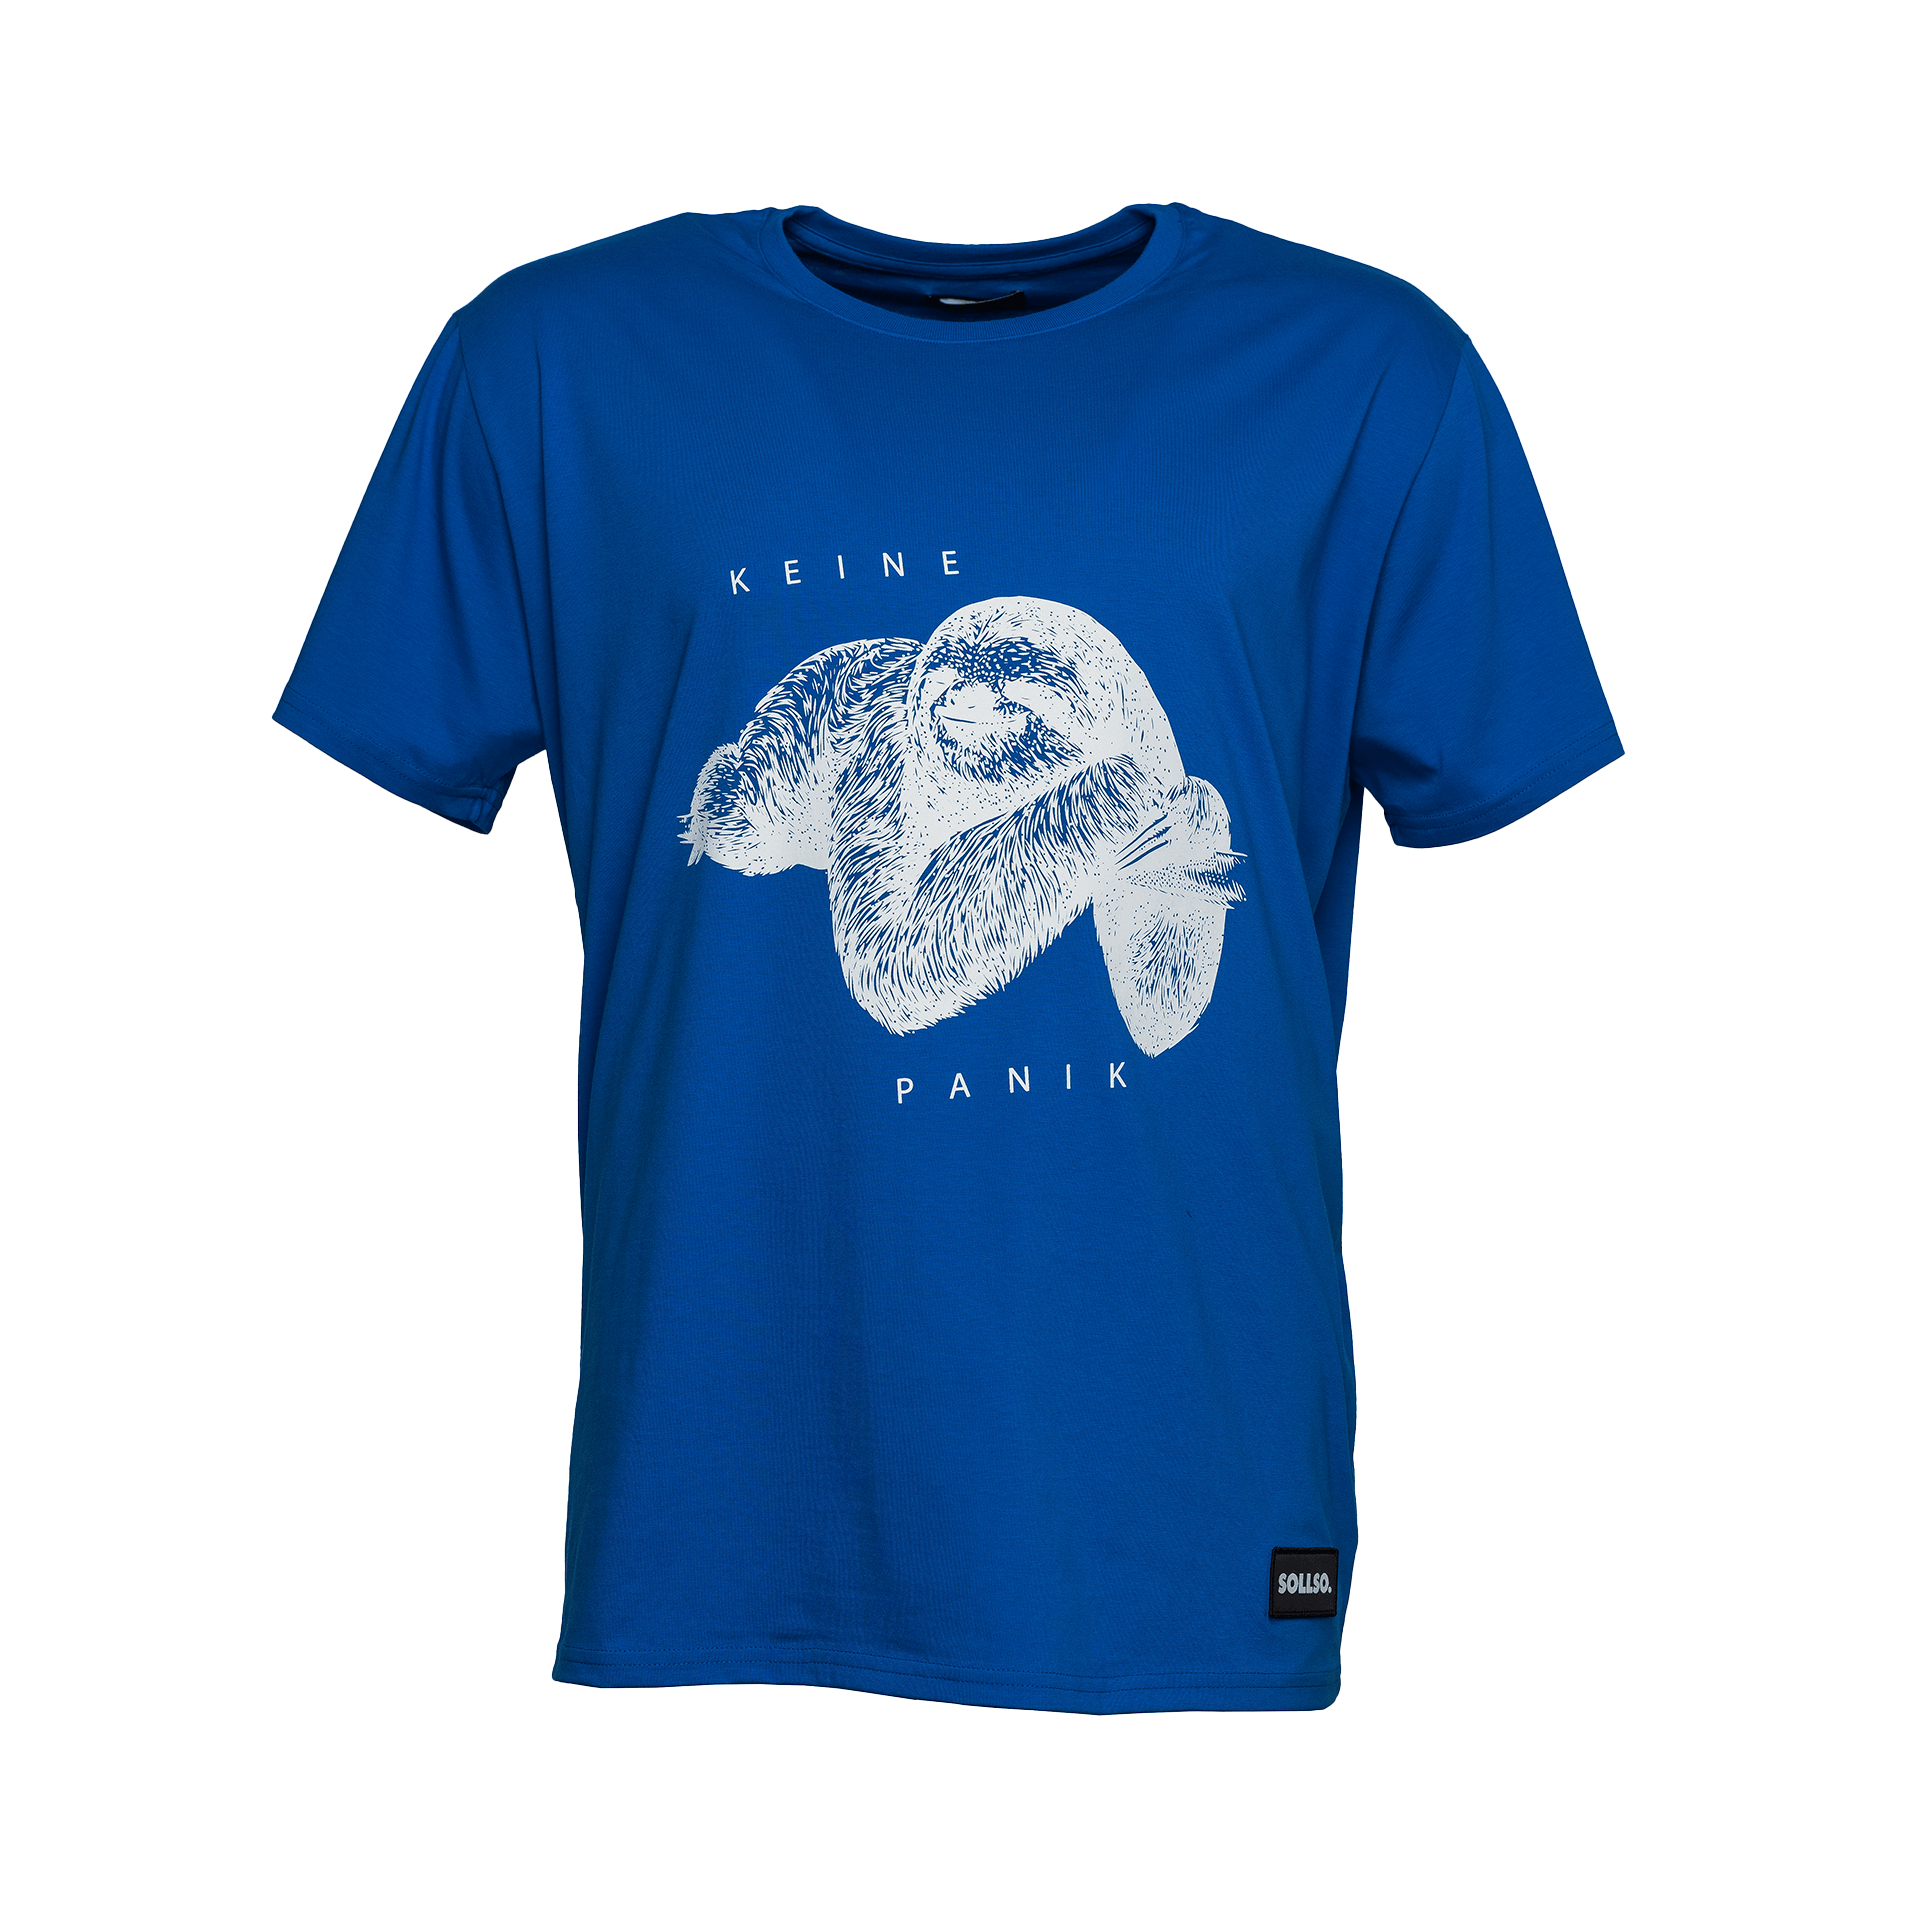 SOLLSO. T-Shirt "Keine Panik Faultier", Farbe Ocean Blue, Größe 6XL